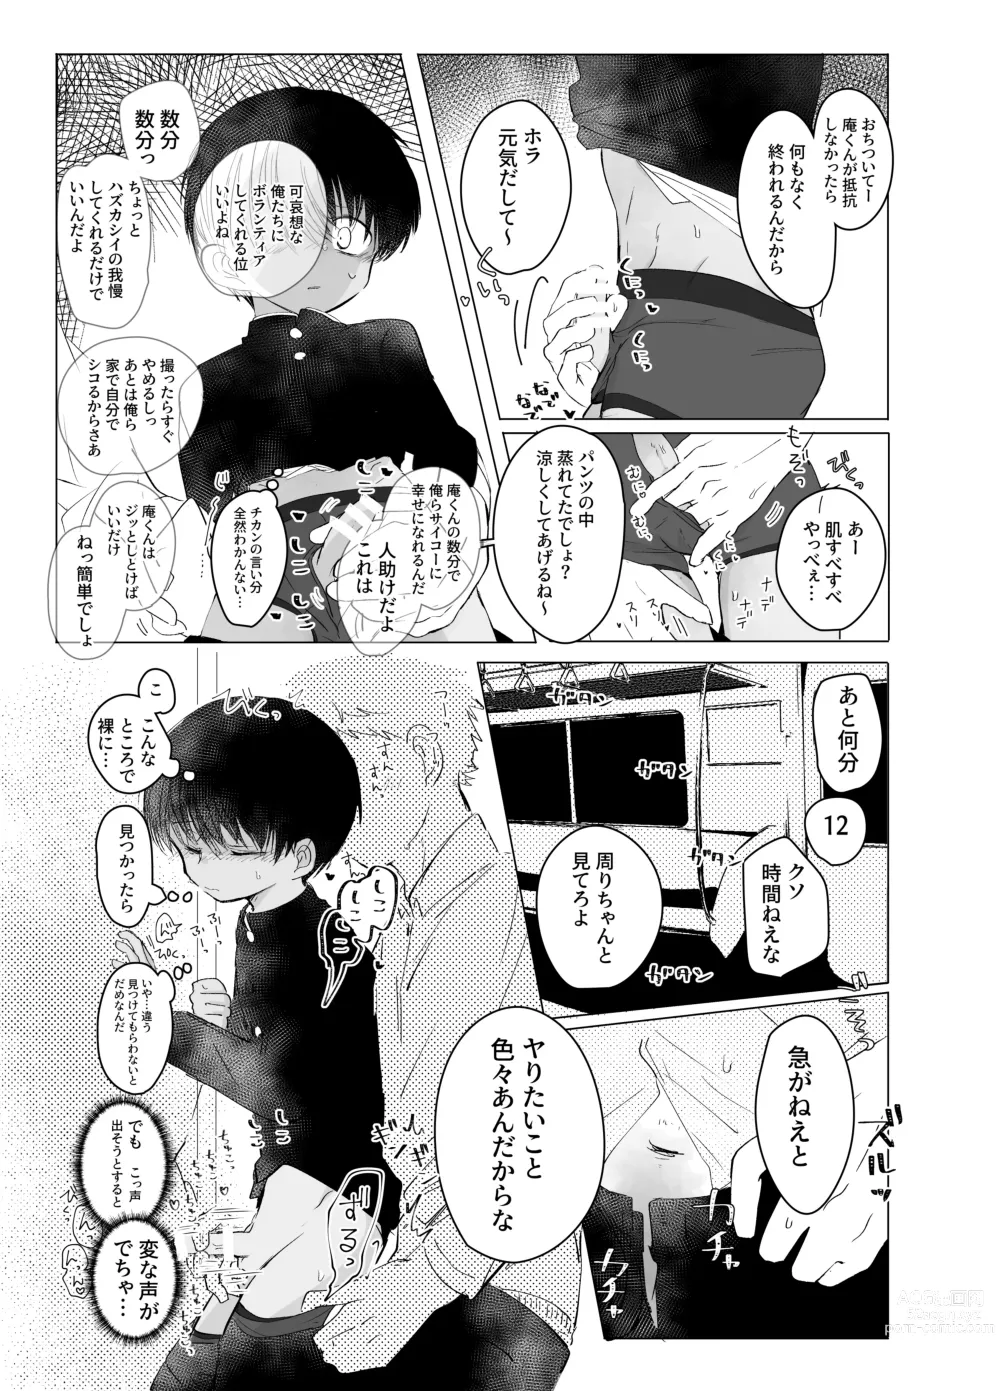 Page 14 of doujinshi Tousatsu Train